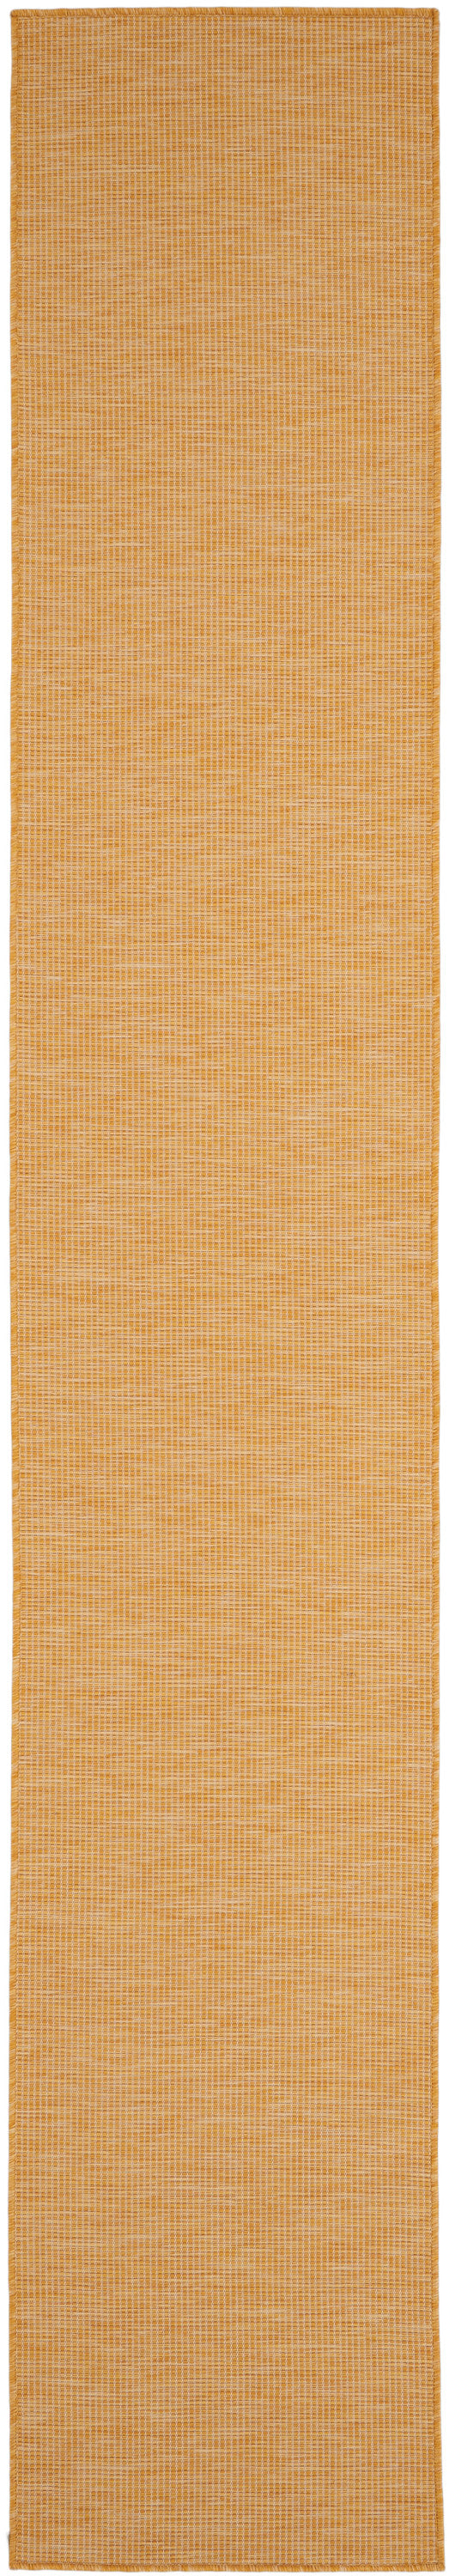 media image for positano yellow rug by nourison 99446842442 redo 3 243